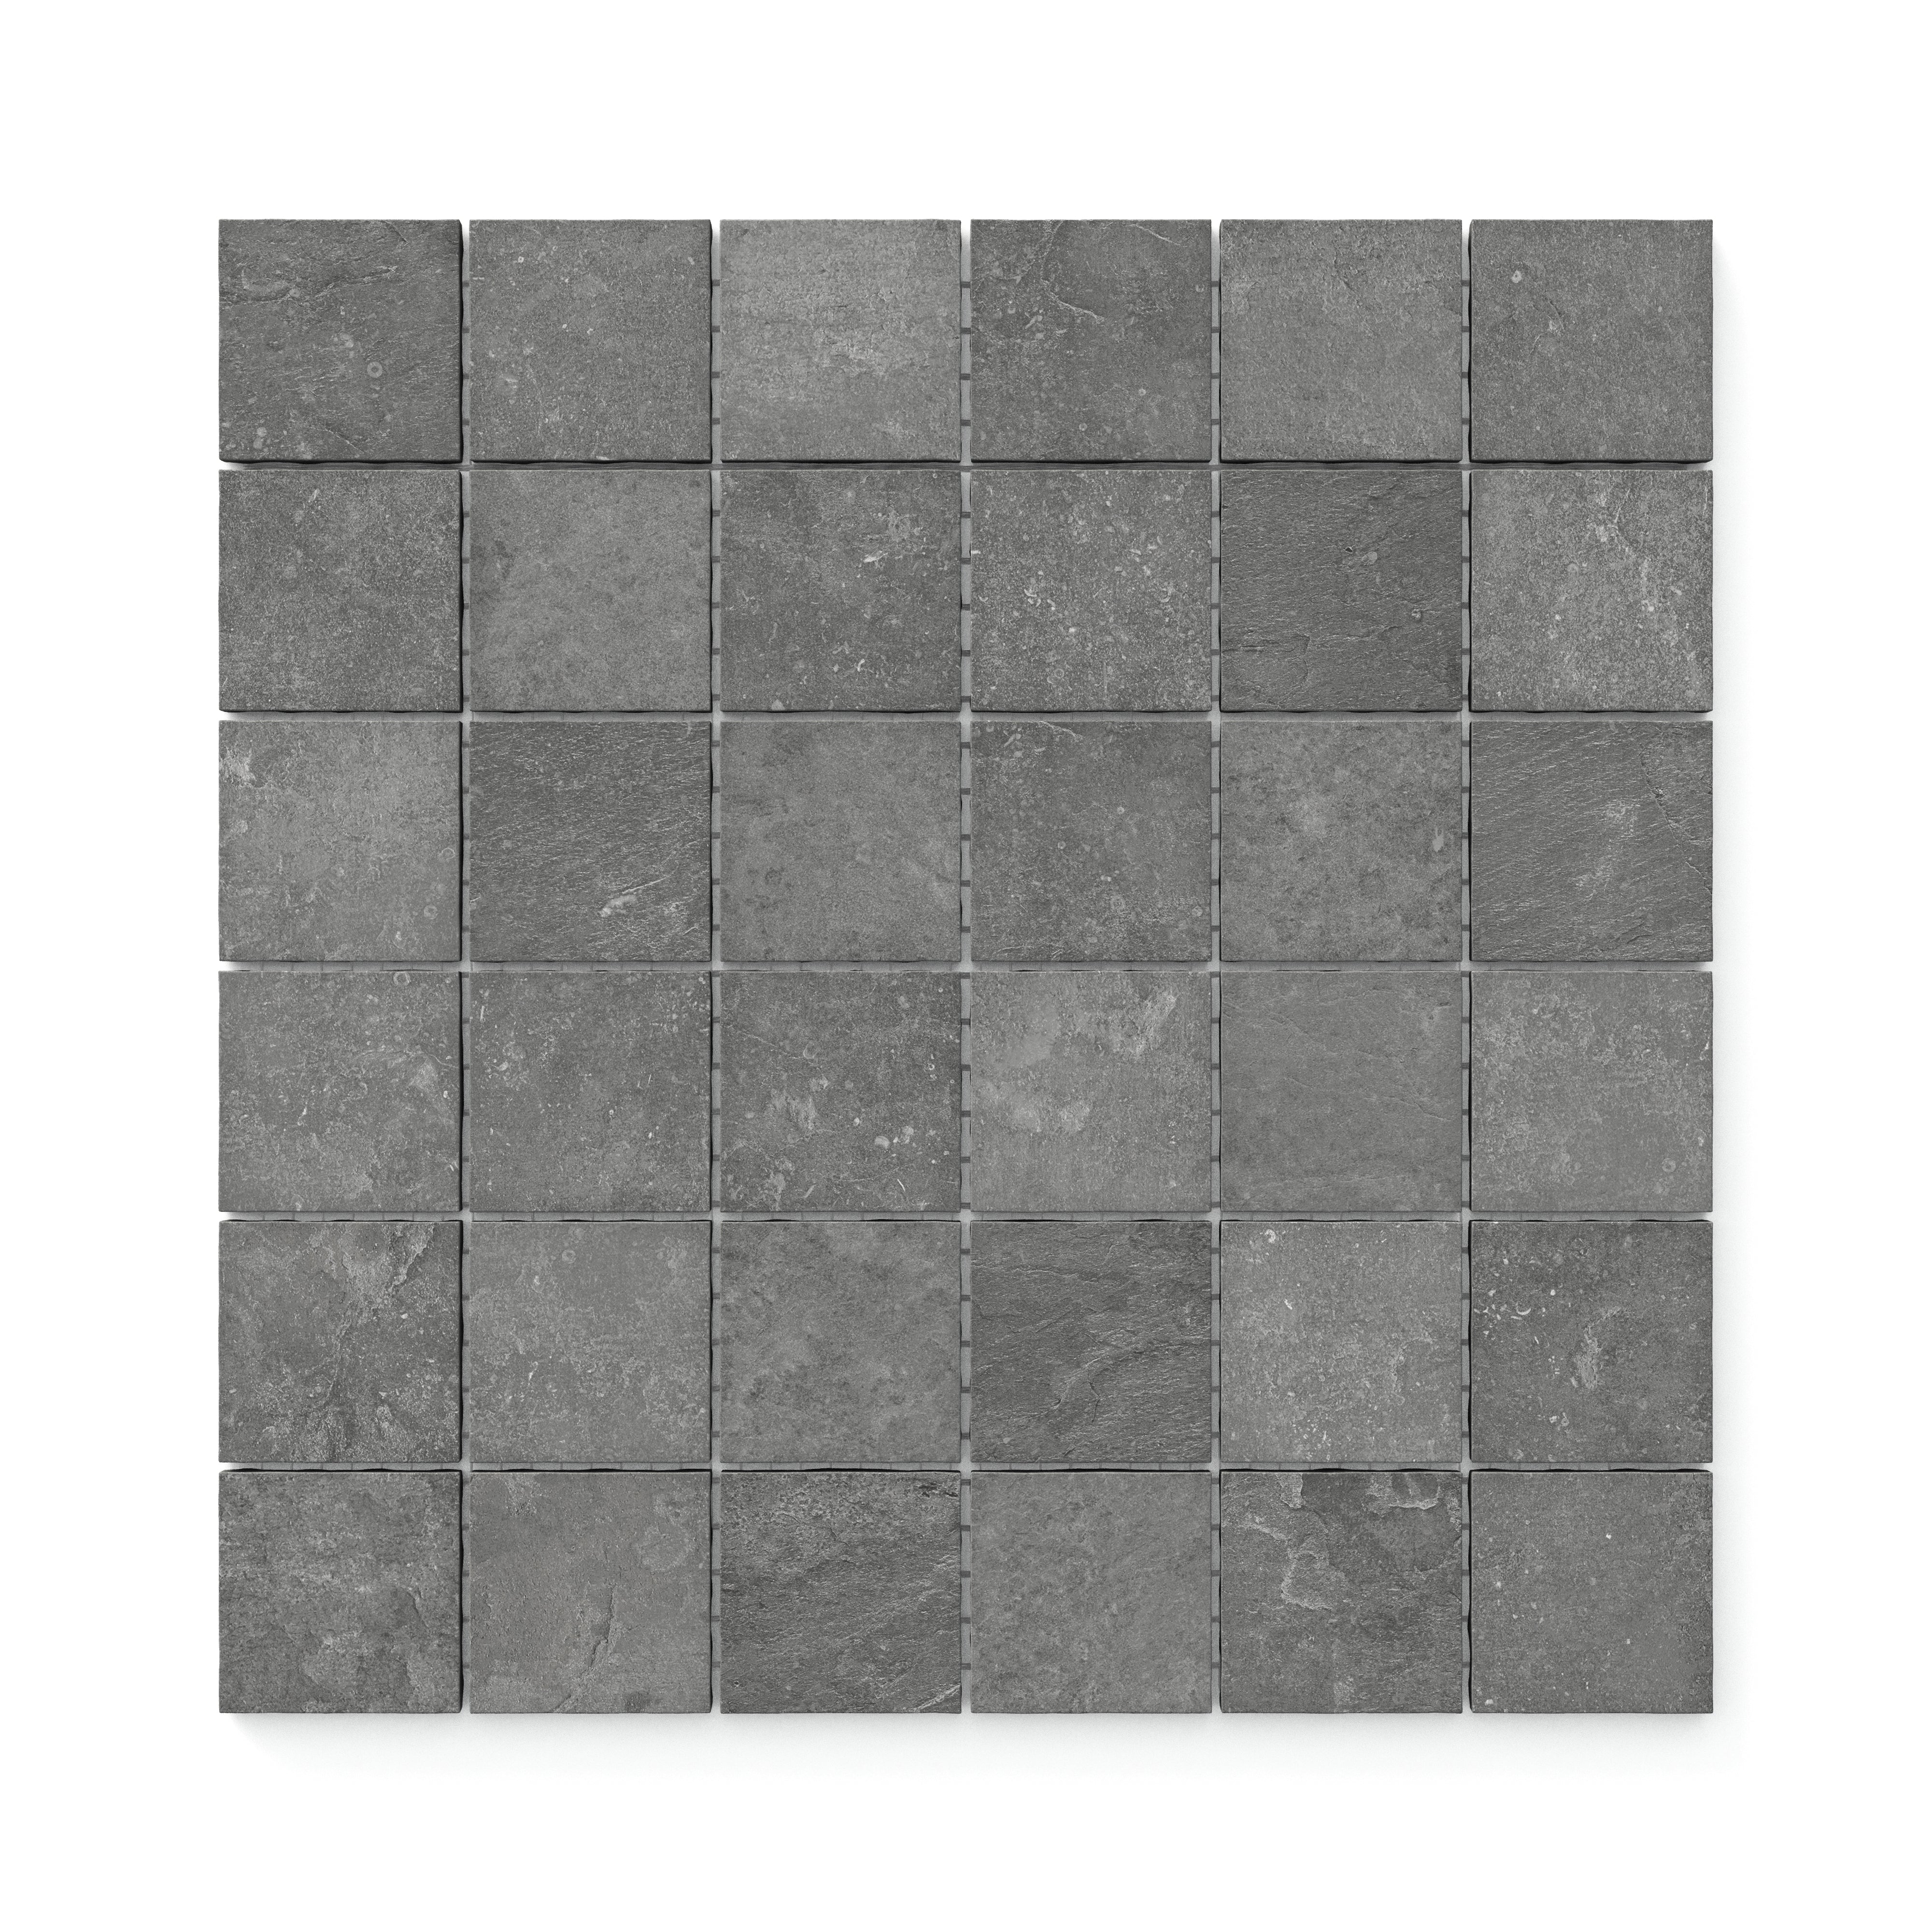 Wren 2x2 Matte Porcelain Mosaic Tile in Charcoal